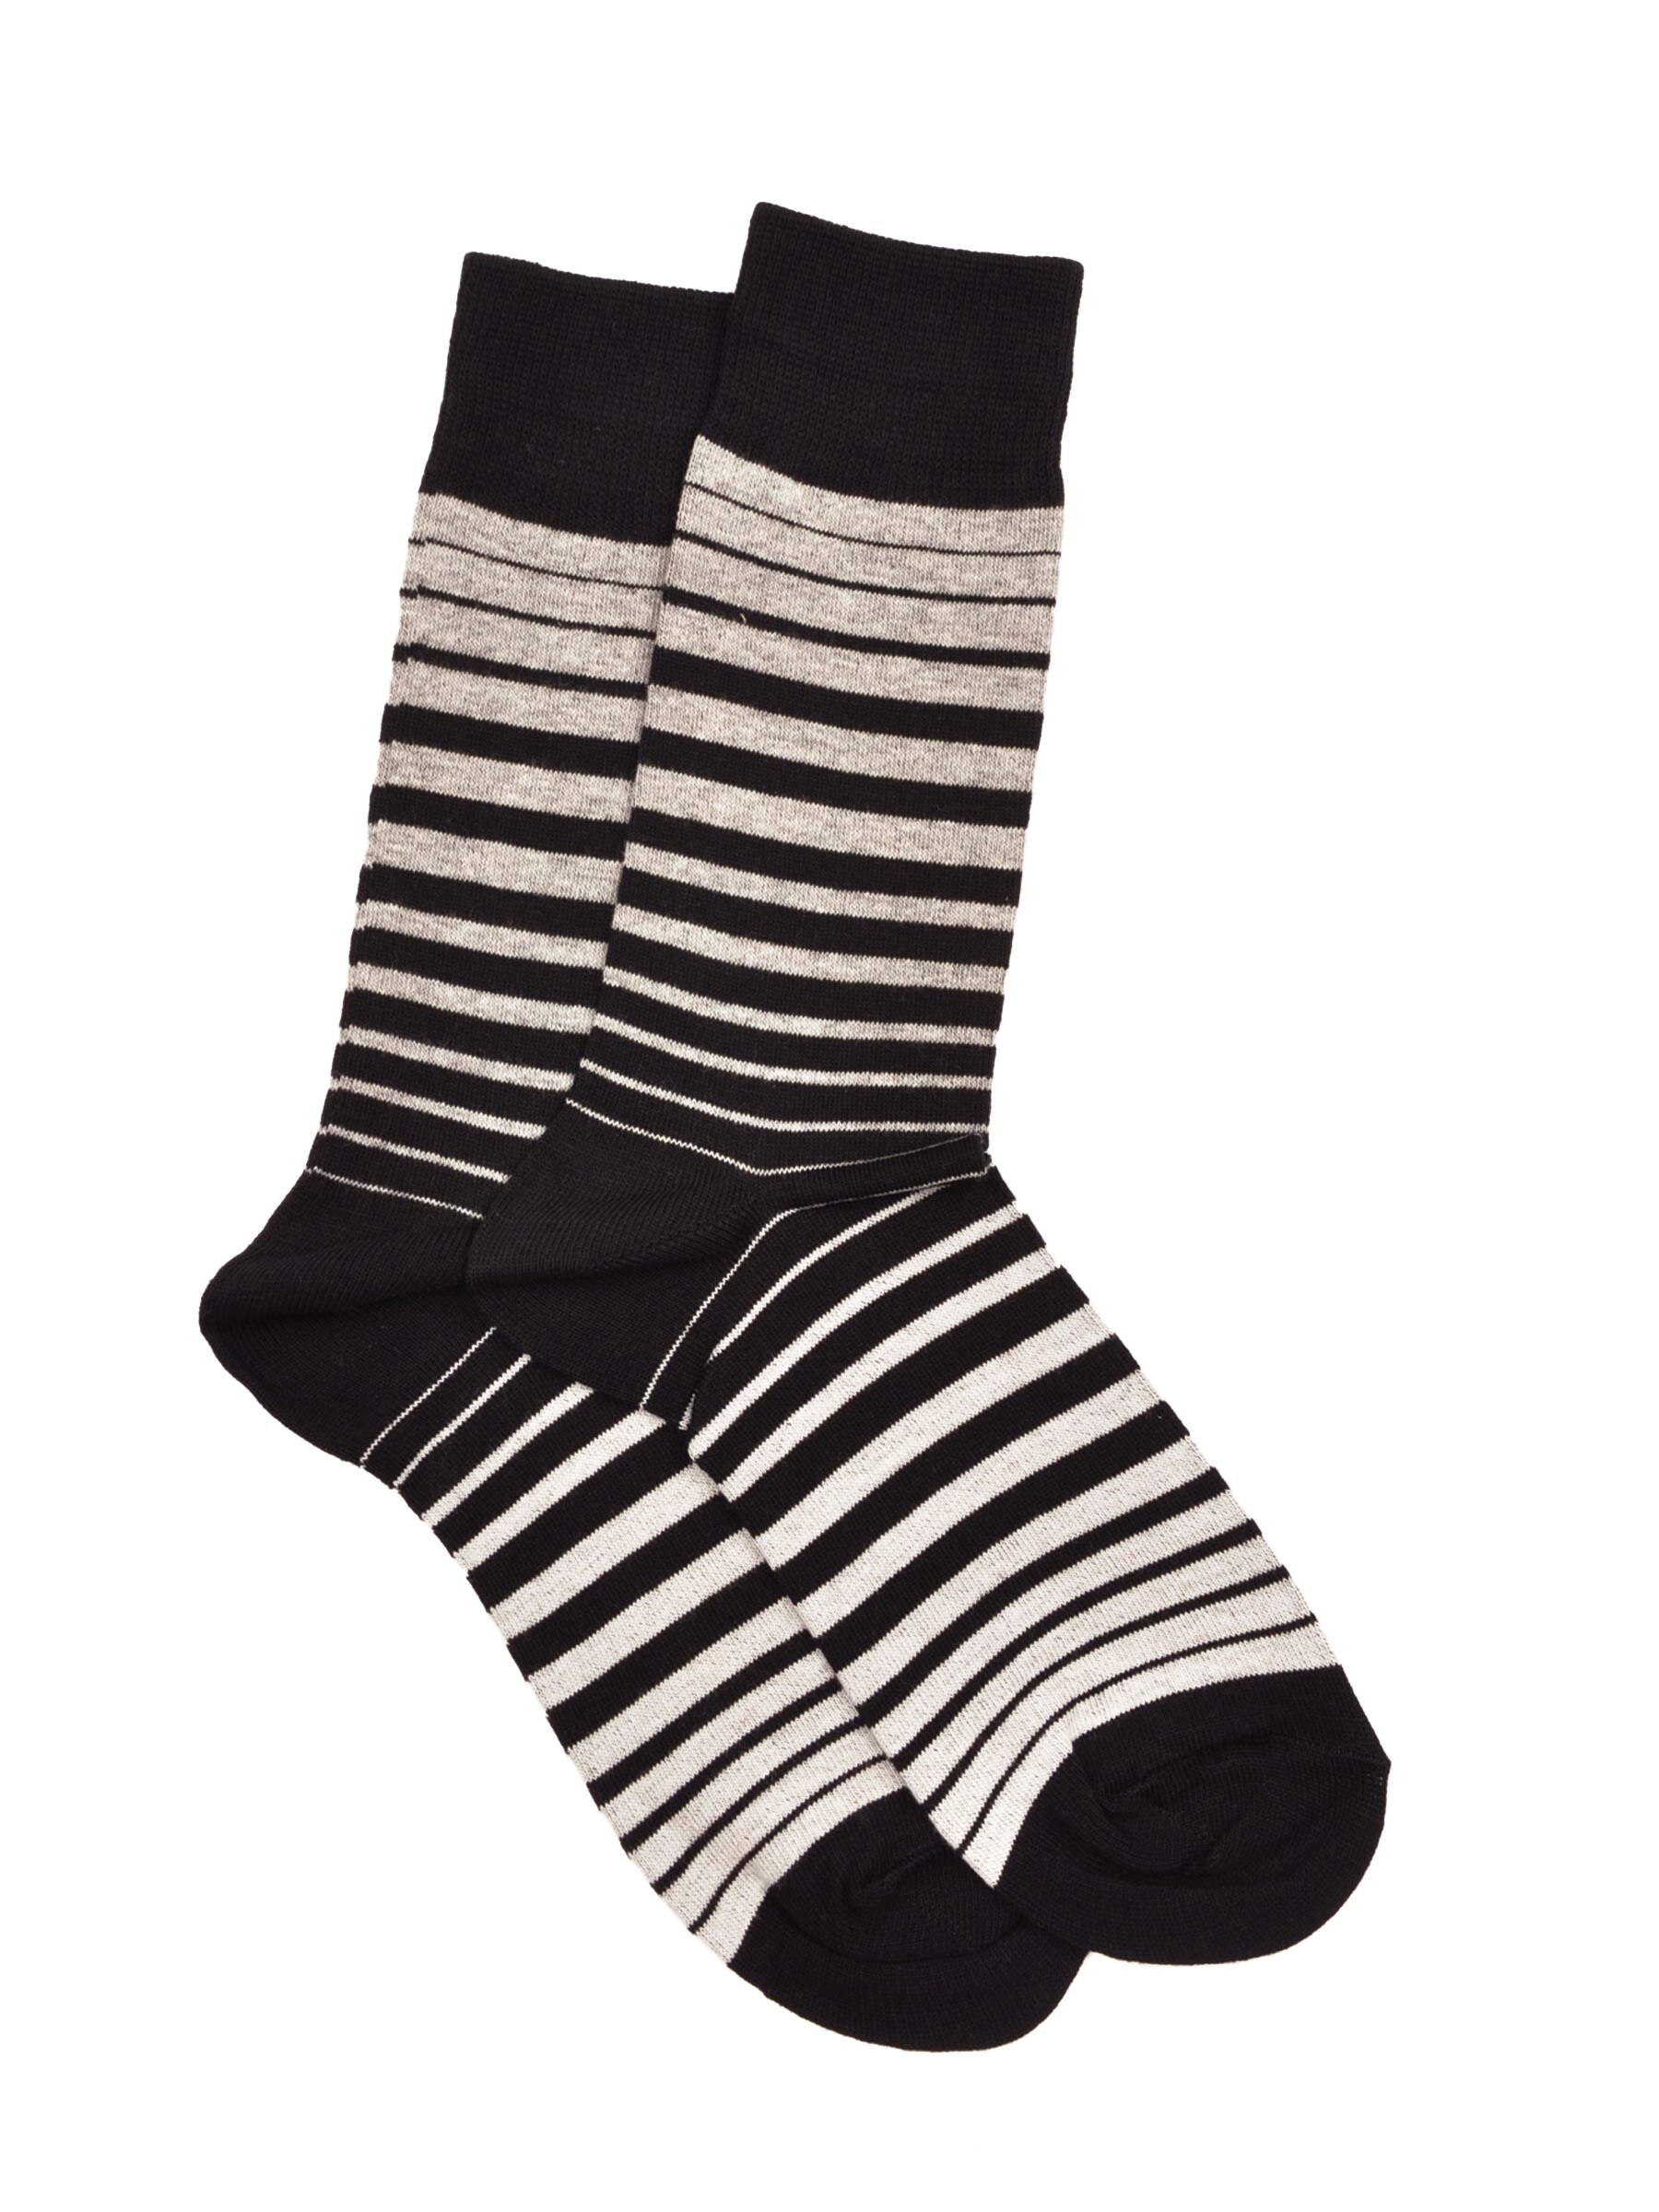 Reid & Taylor Men Stripes Black Socks